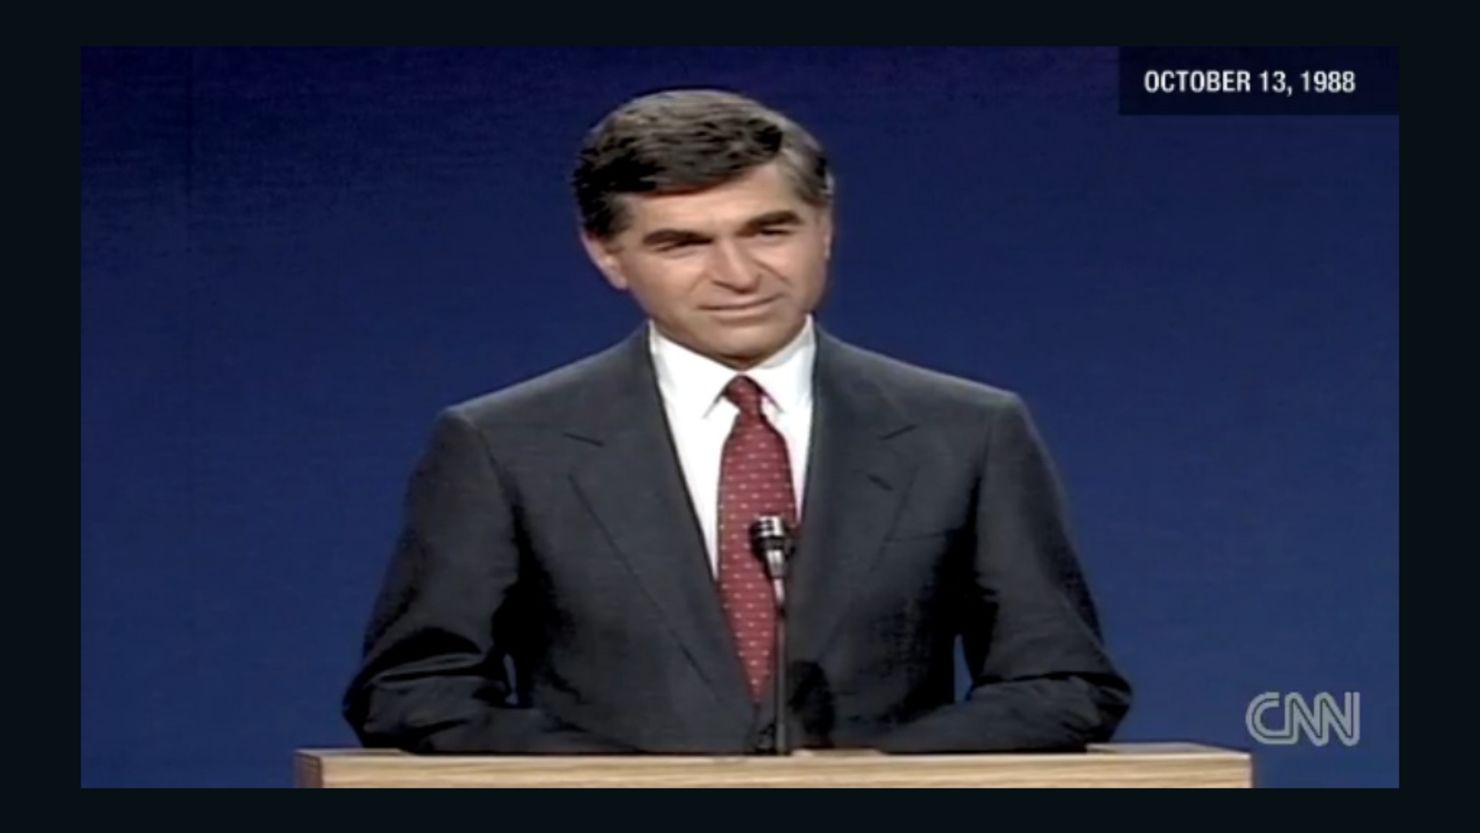 Michael Dukakis at a 1988 presidential debate. Vice President Bush used Dukakis' record against him, Julian Zelizer says.